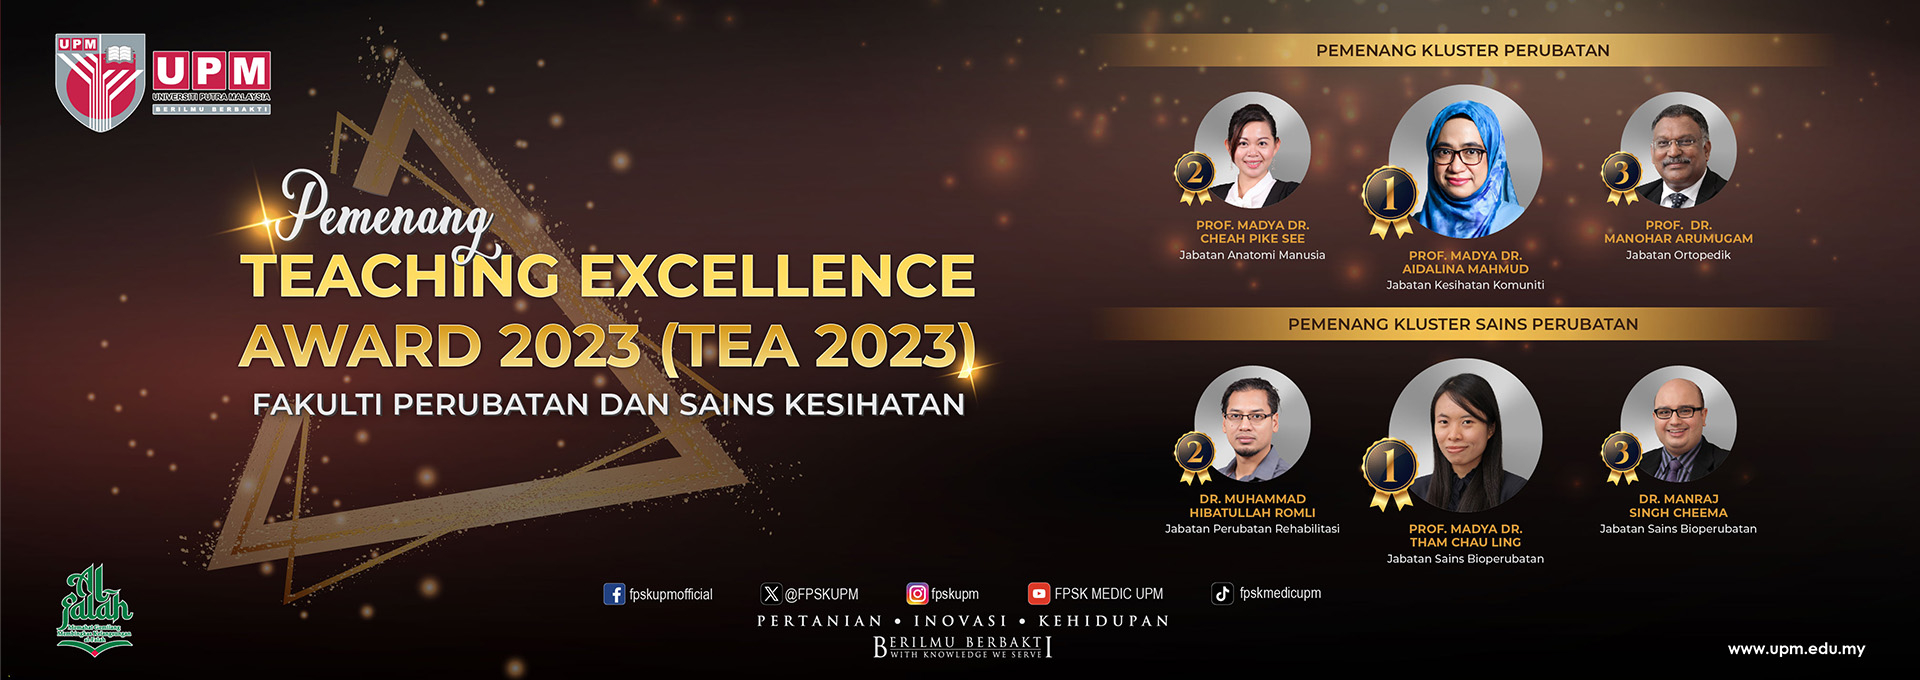 PEMENANG TEACHING EXCELLENCE AWARD 2023 (TEA 2023)